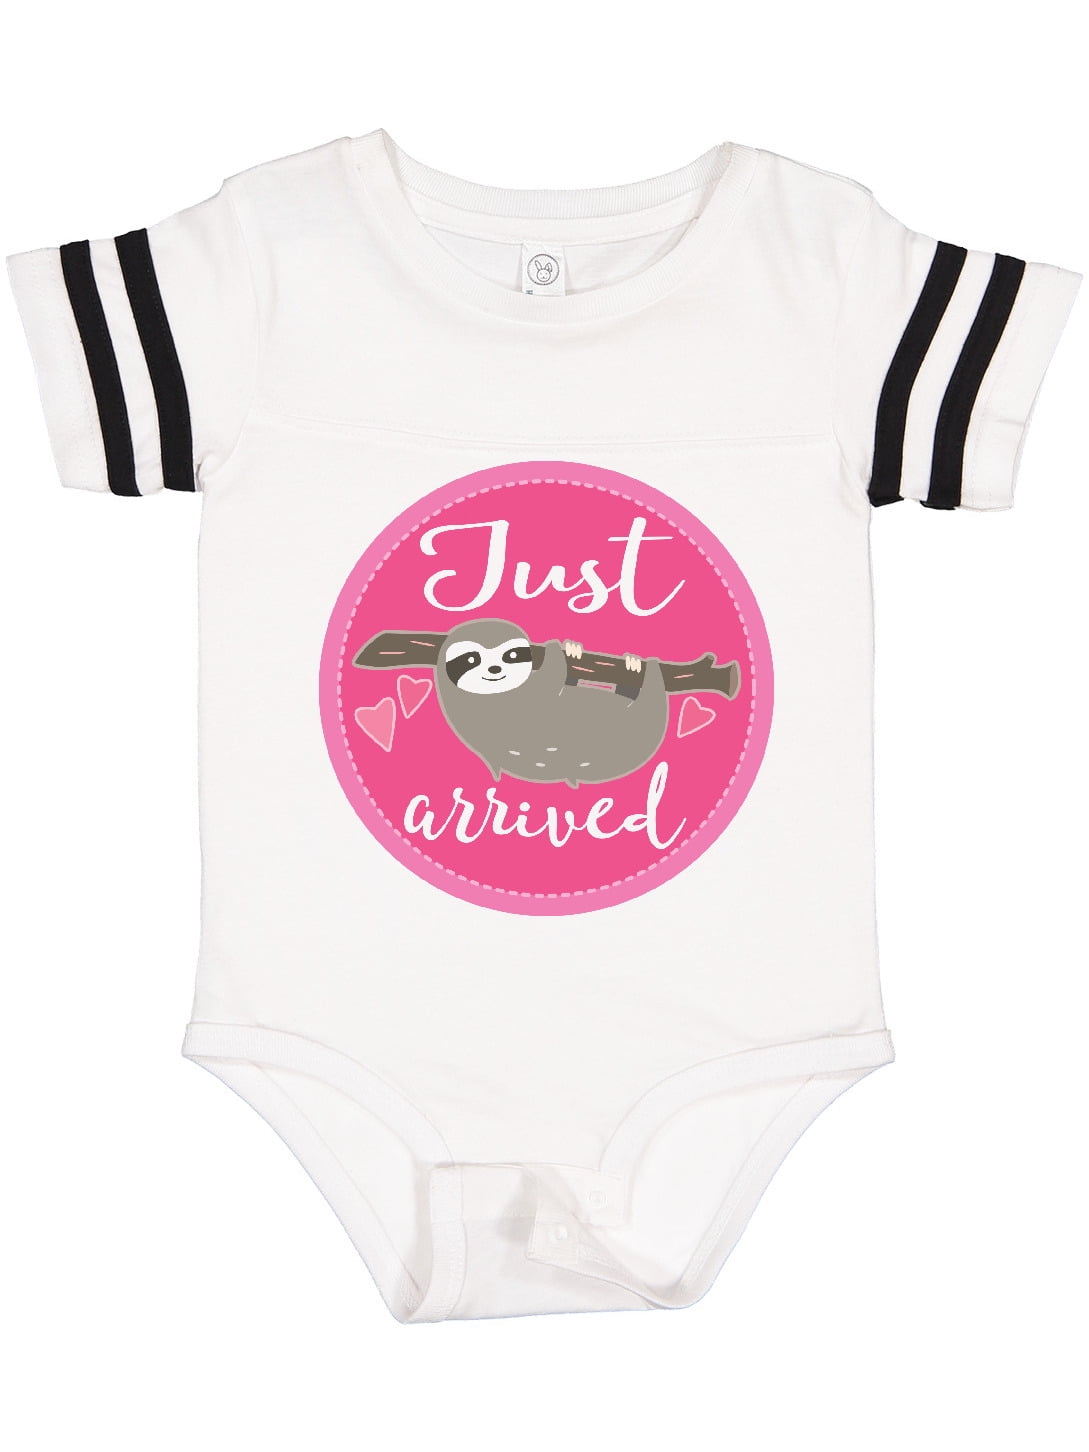 inktastic Cowboy Baby Clothes Hamster Infant Tutu Bodysuit